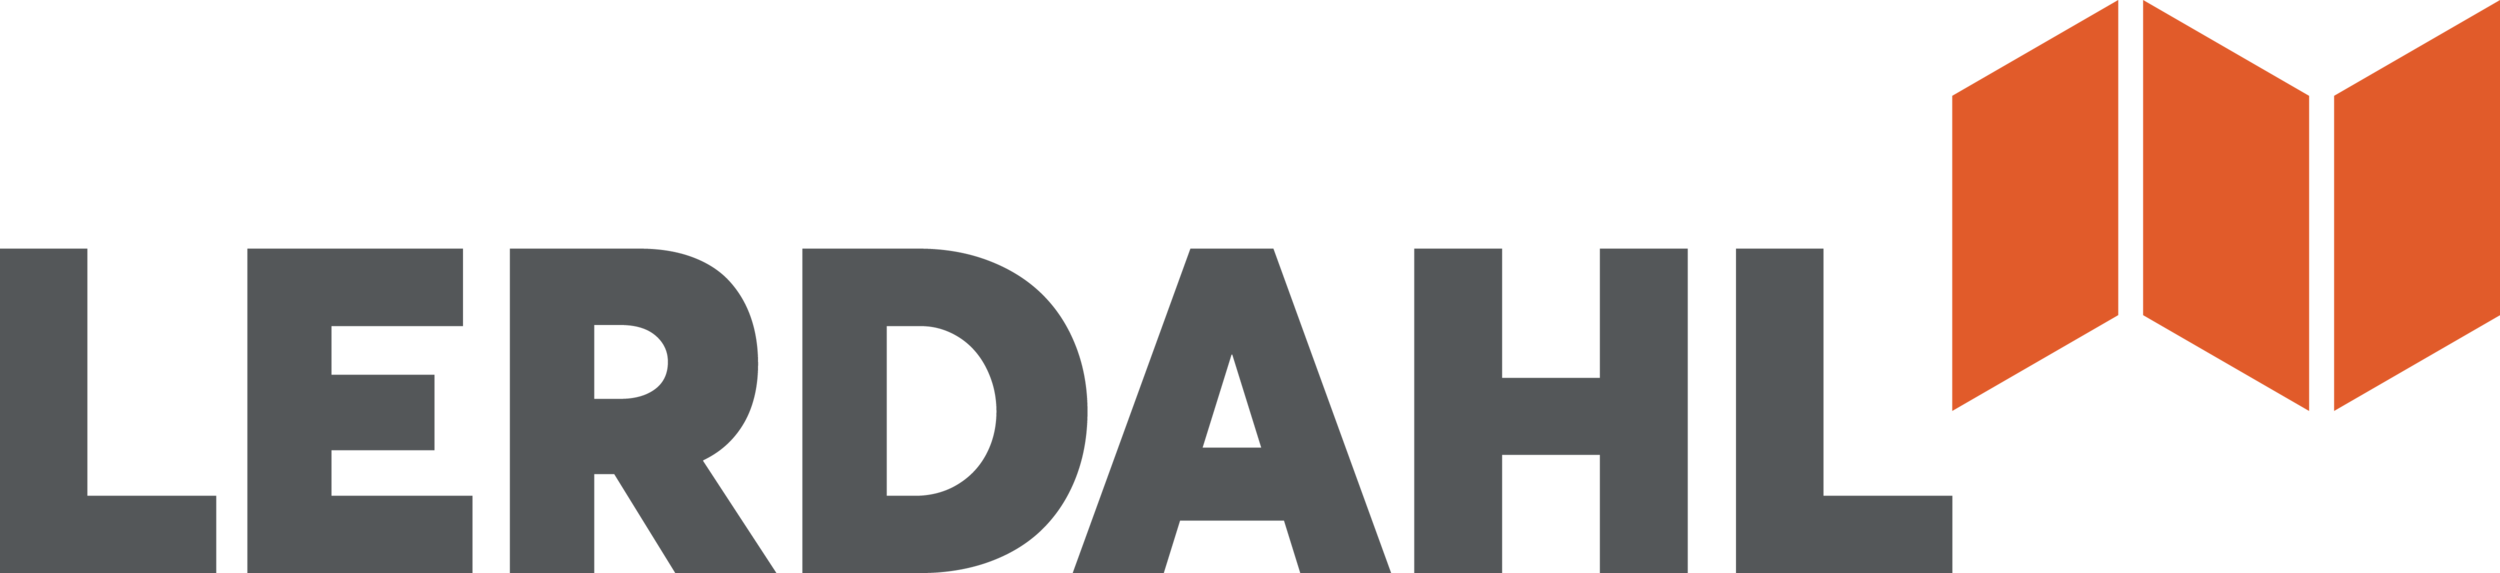 Lerdahl-Logo-2Color-RGB.png